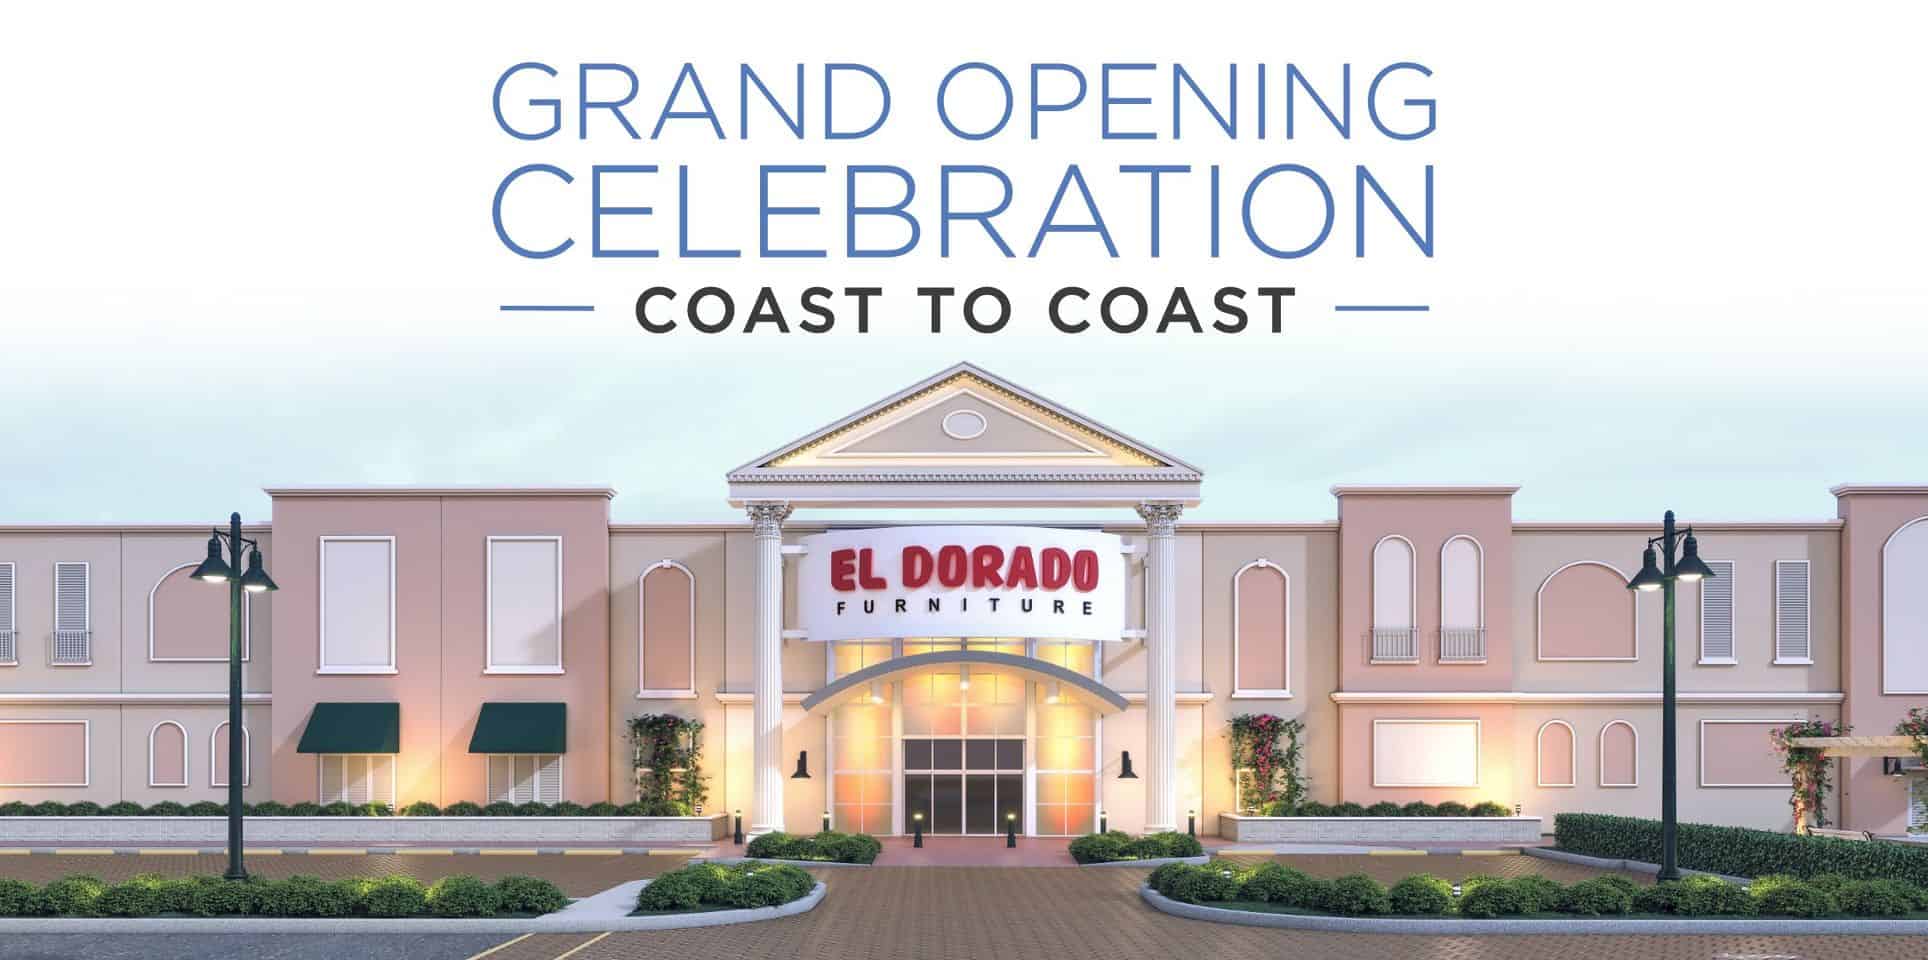 El Dorado Wesley Chapel Grand Opening September 24-25